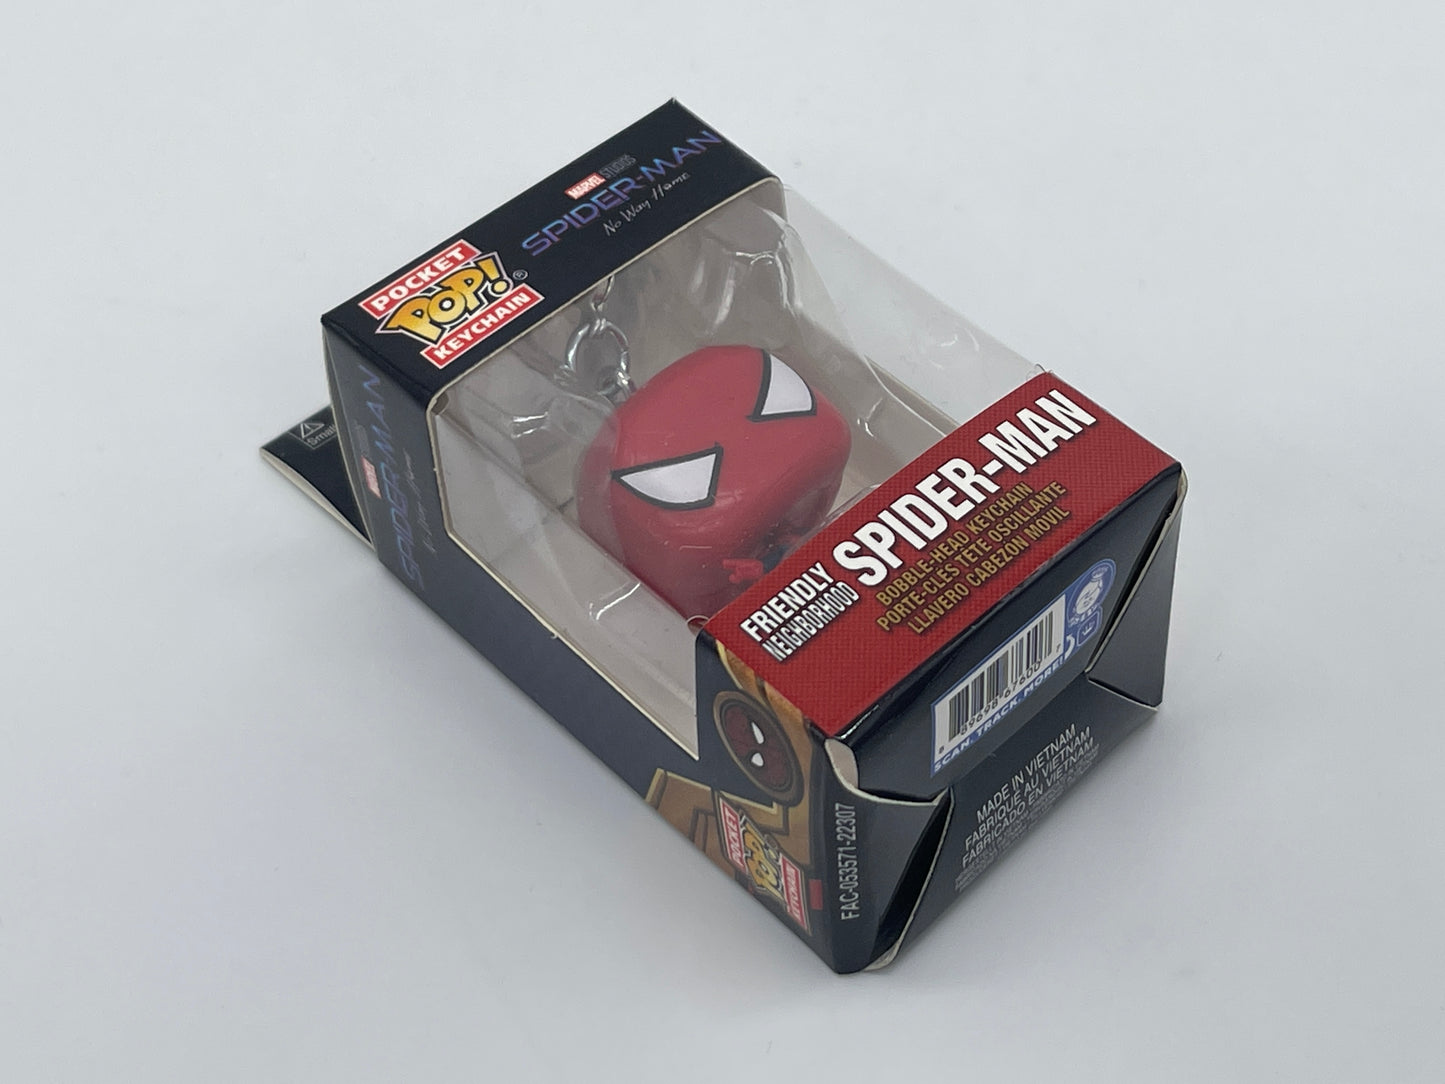 Funko Pocket POP Keychain "Friendly Neighborhood Spider-Man" No Way Home Marvel